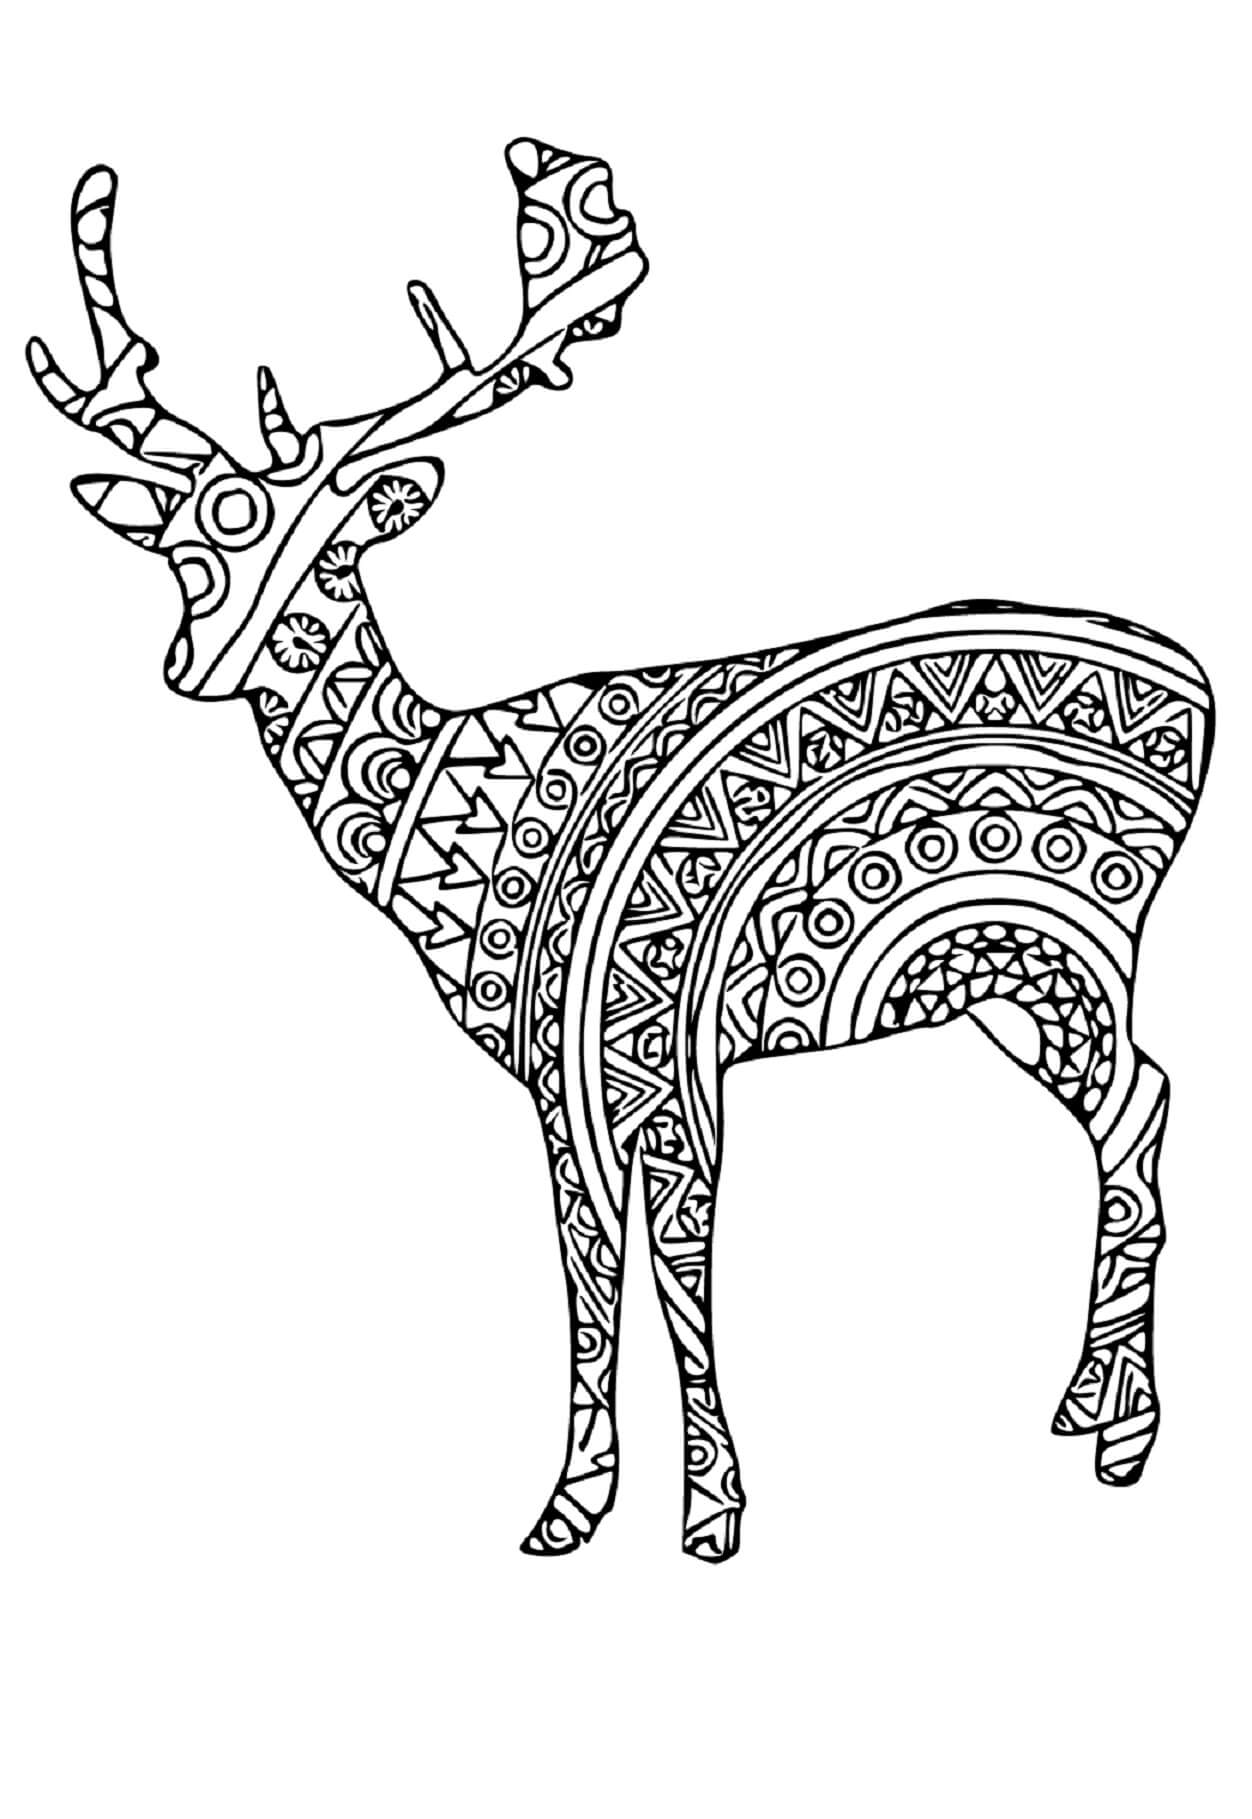 Mandala Reindeer Coloring Page - Sheet 2 Mandalas